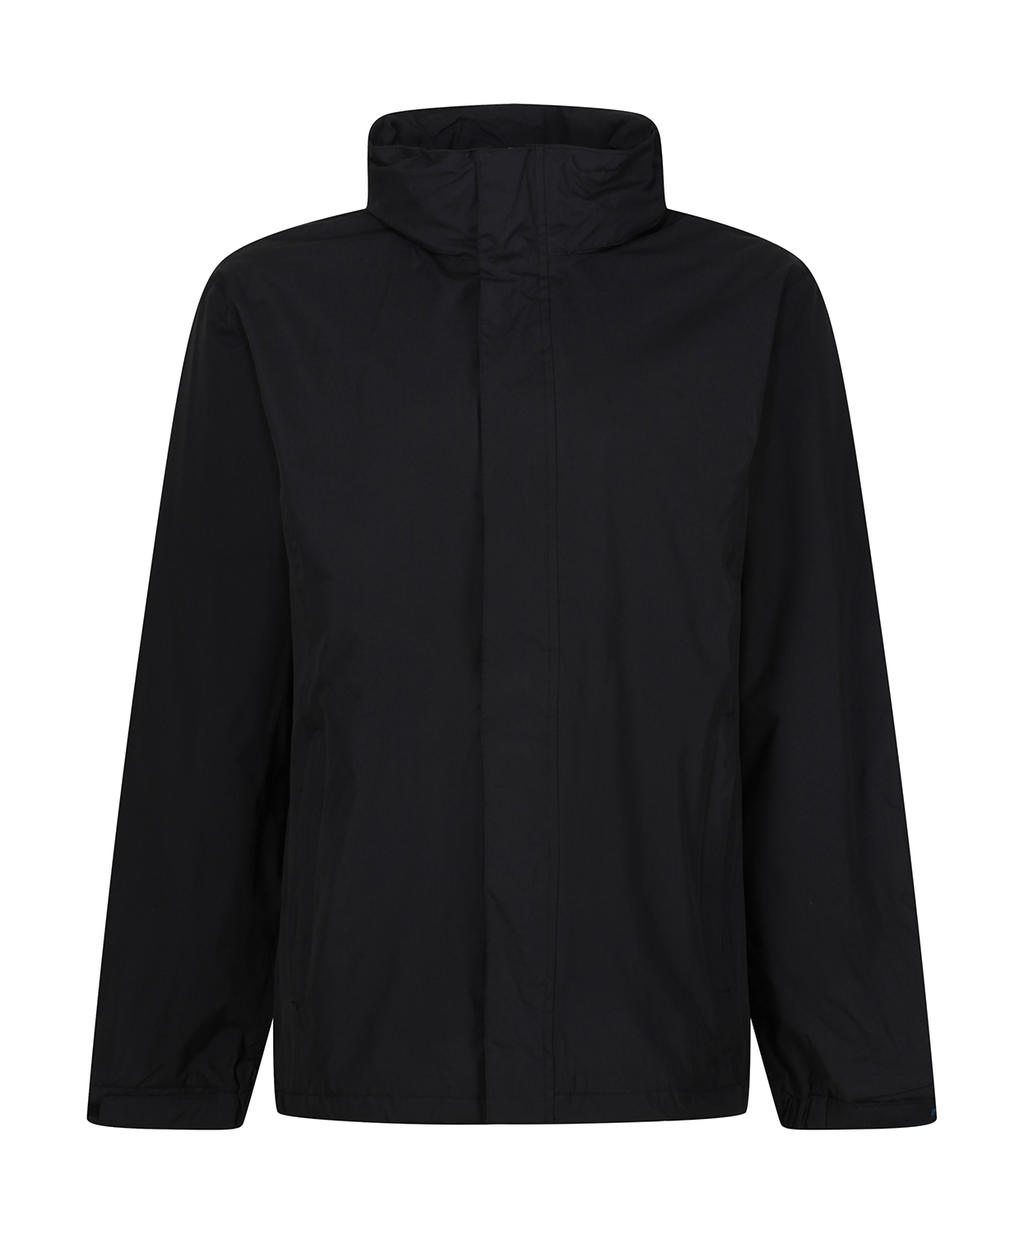  Ardmore Jacket in Farbe Black